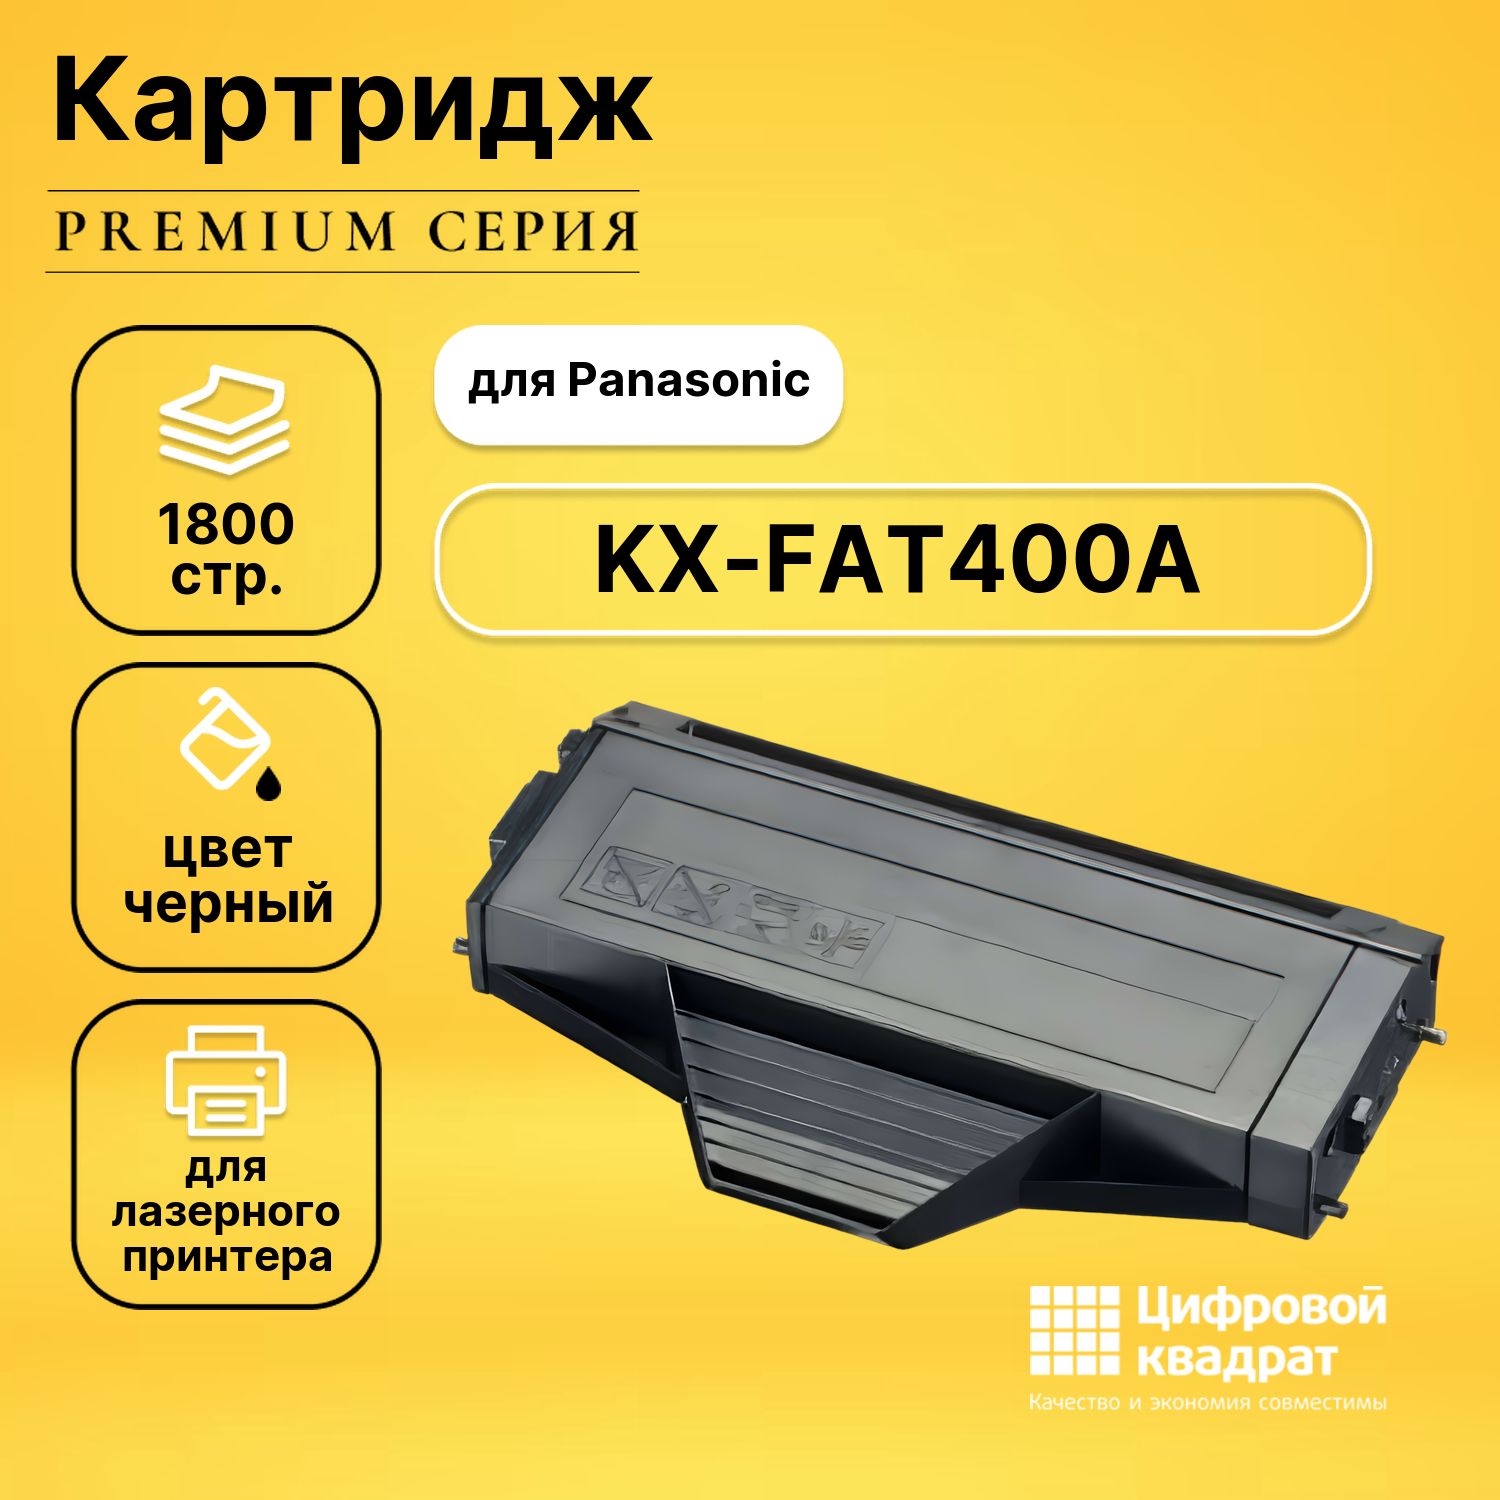 Картридж DS KX-FAT400A Panasonic совместимый